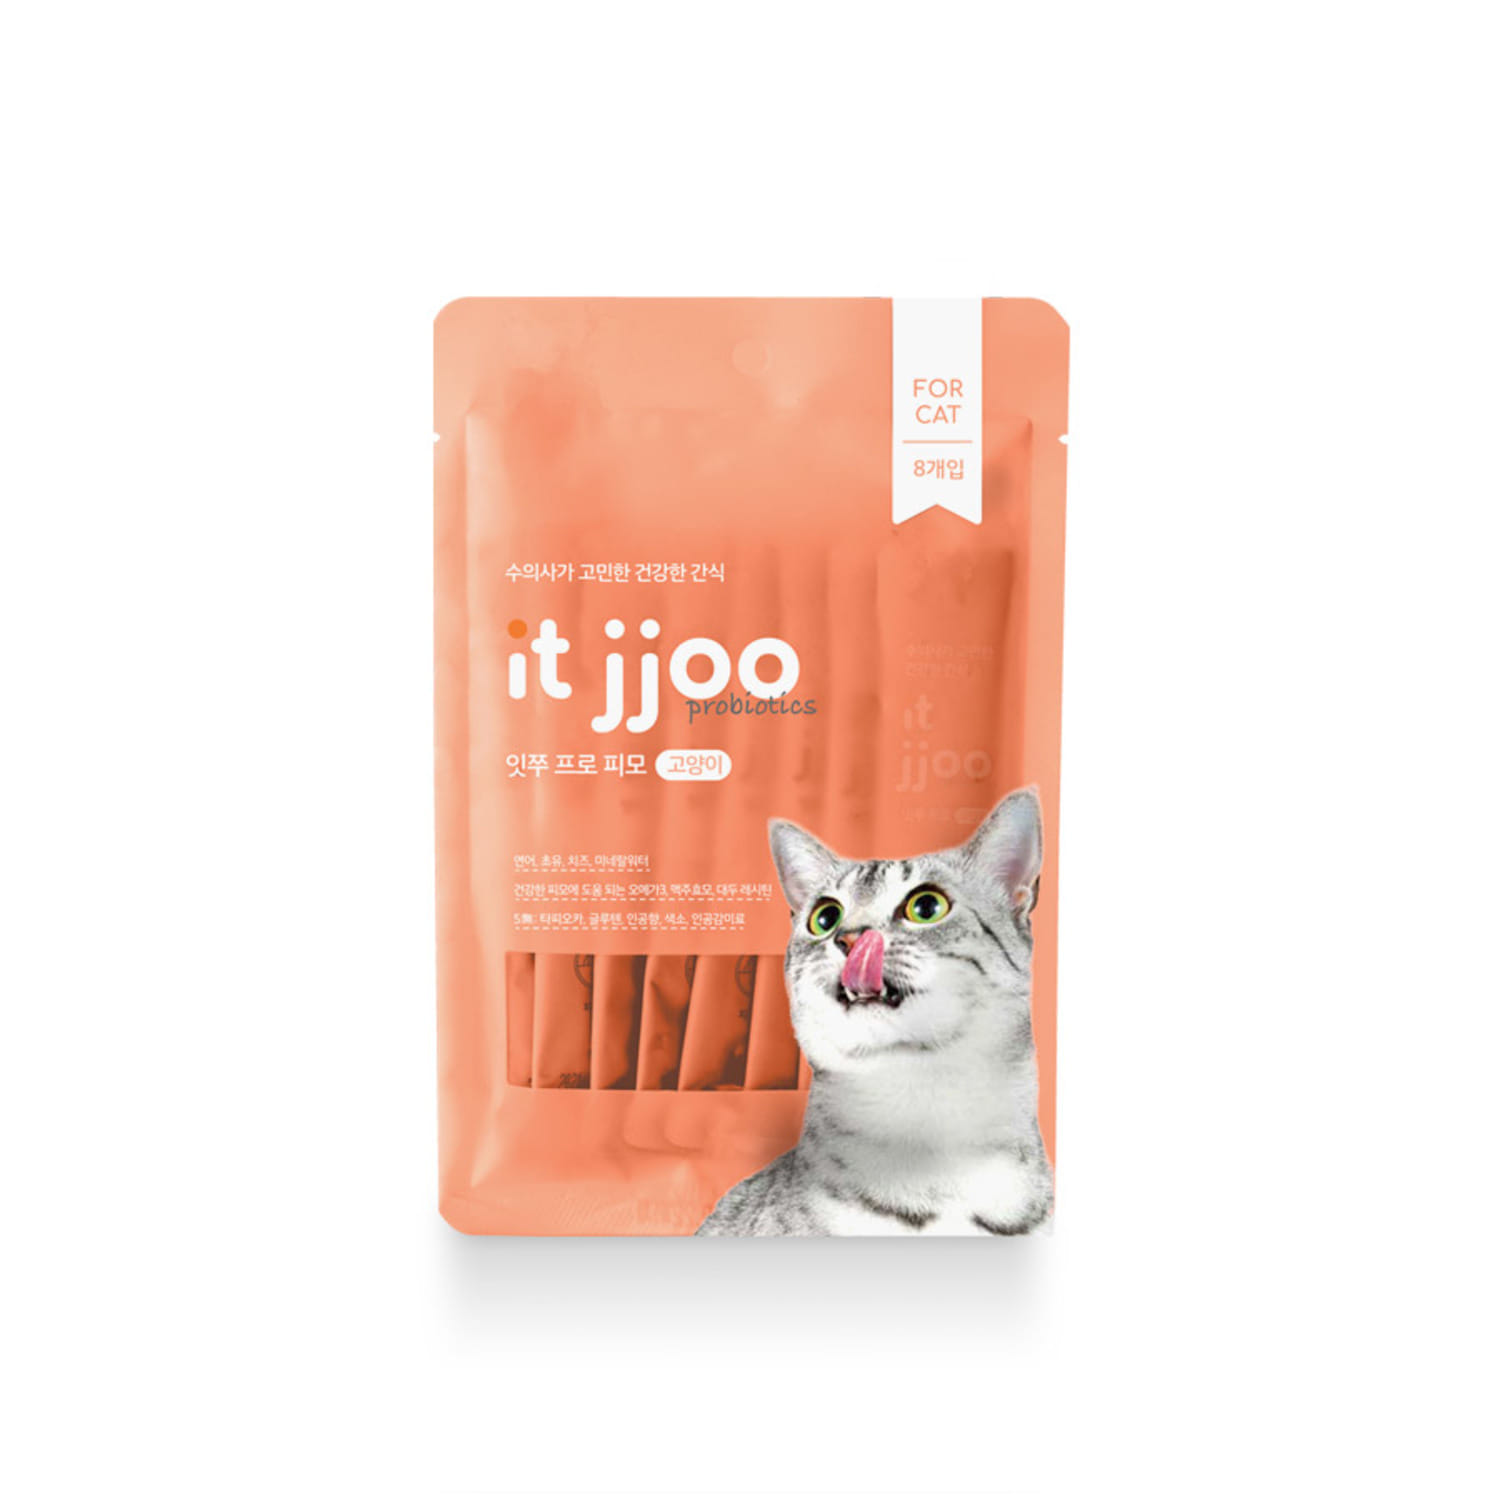 It jjoo Pro Hair loss Care for Cat, (10g/8ea) (~) - DAN ONLINE